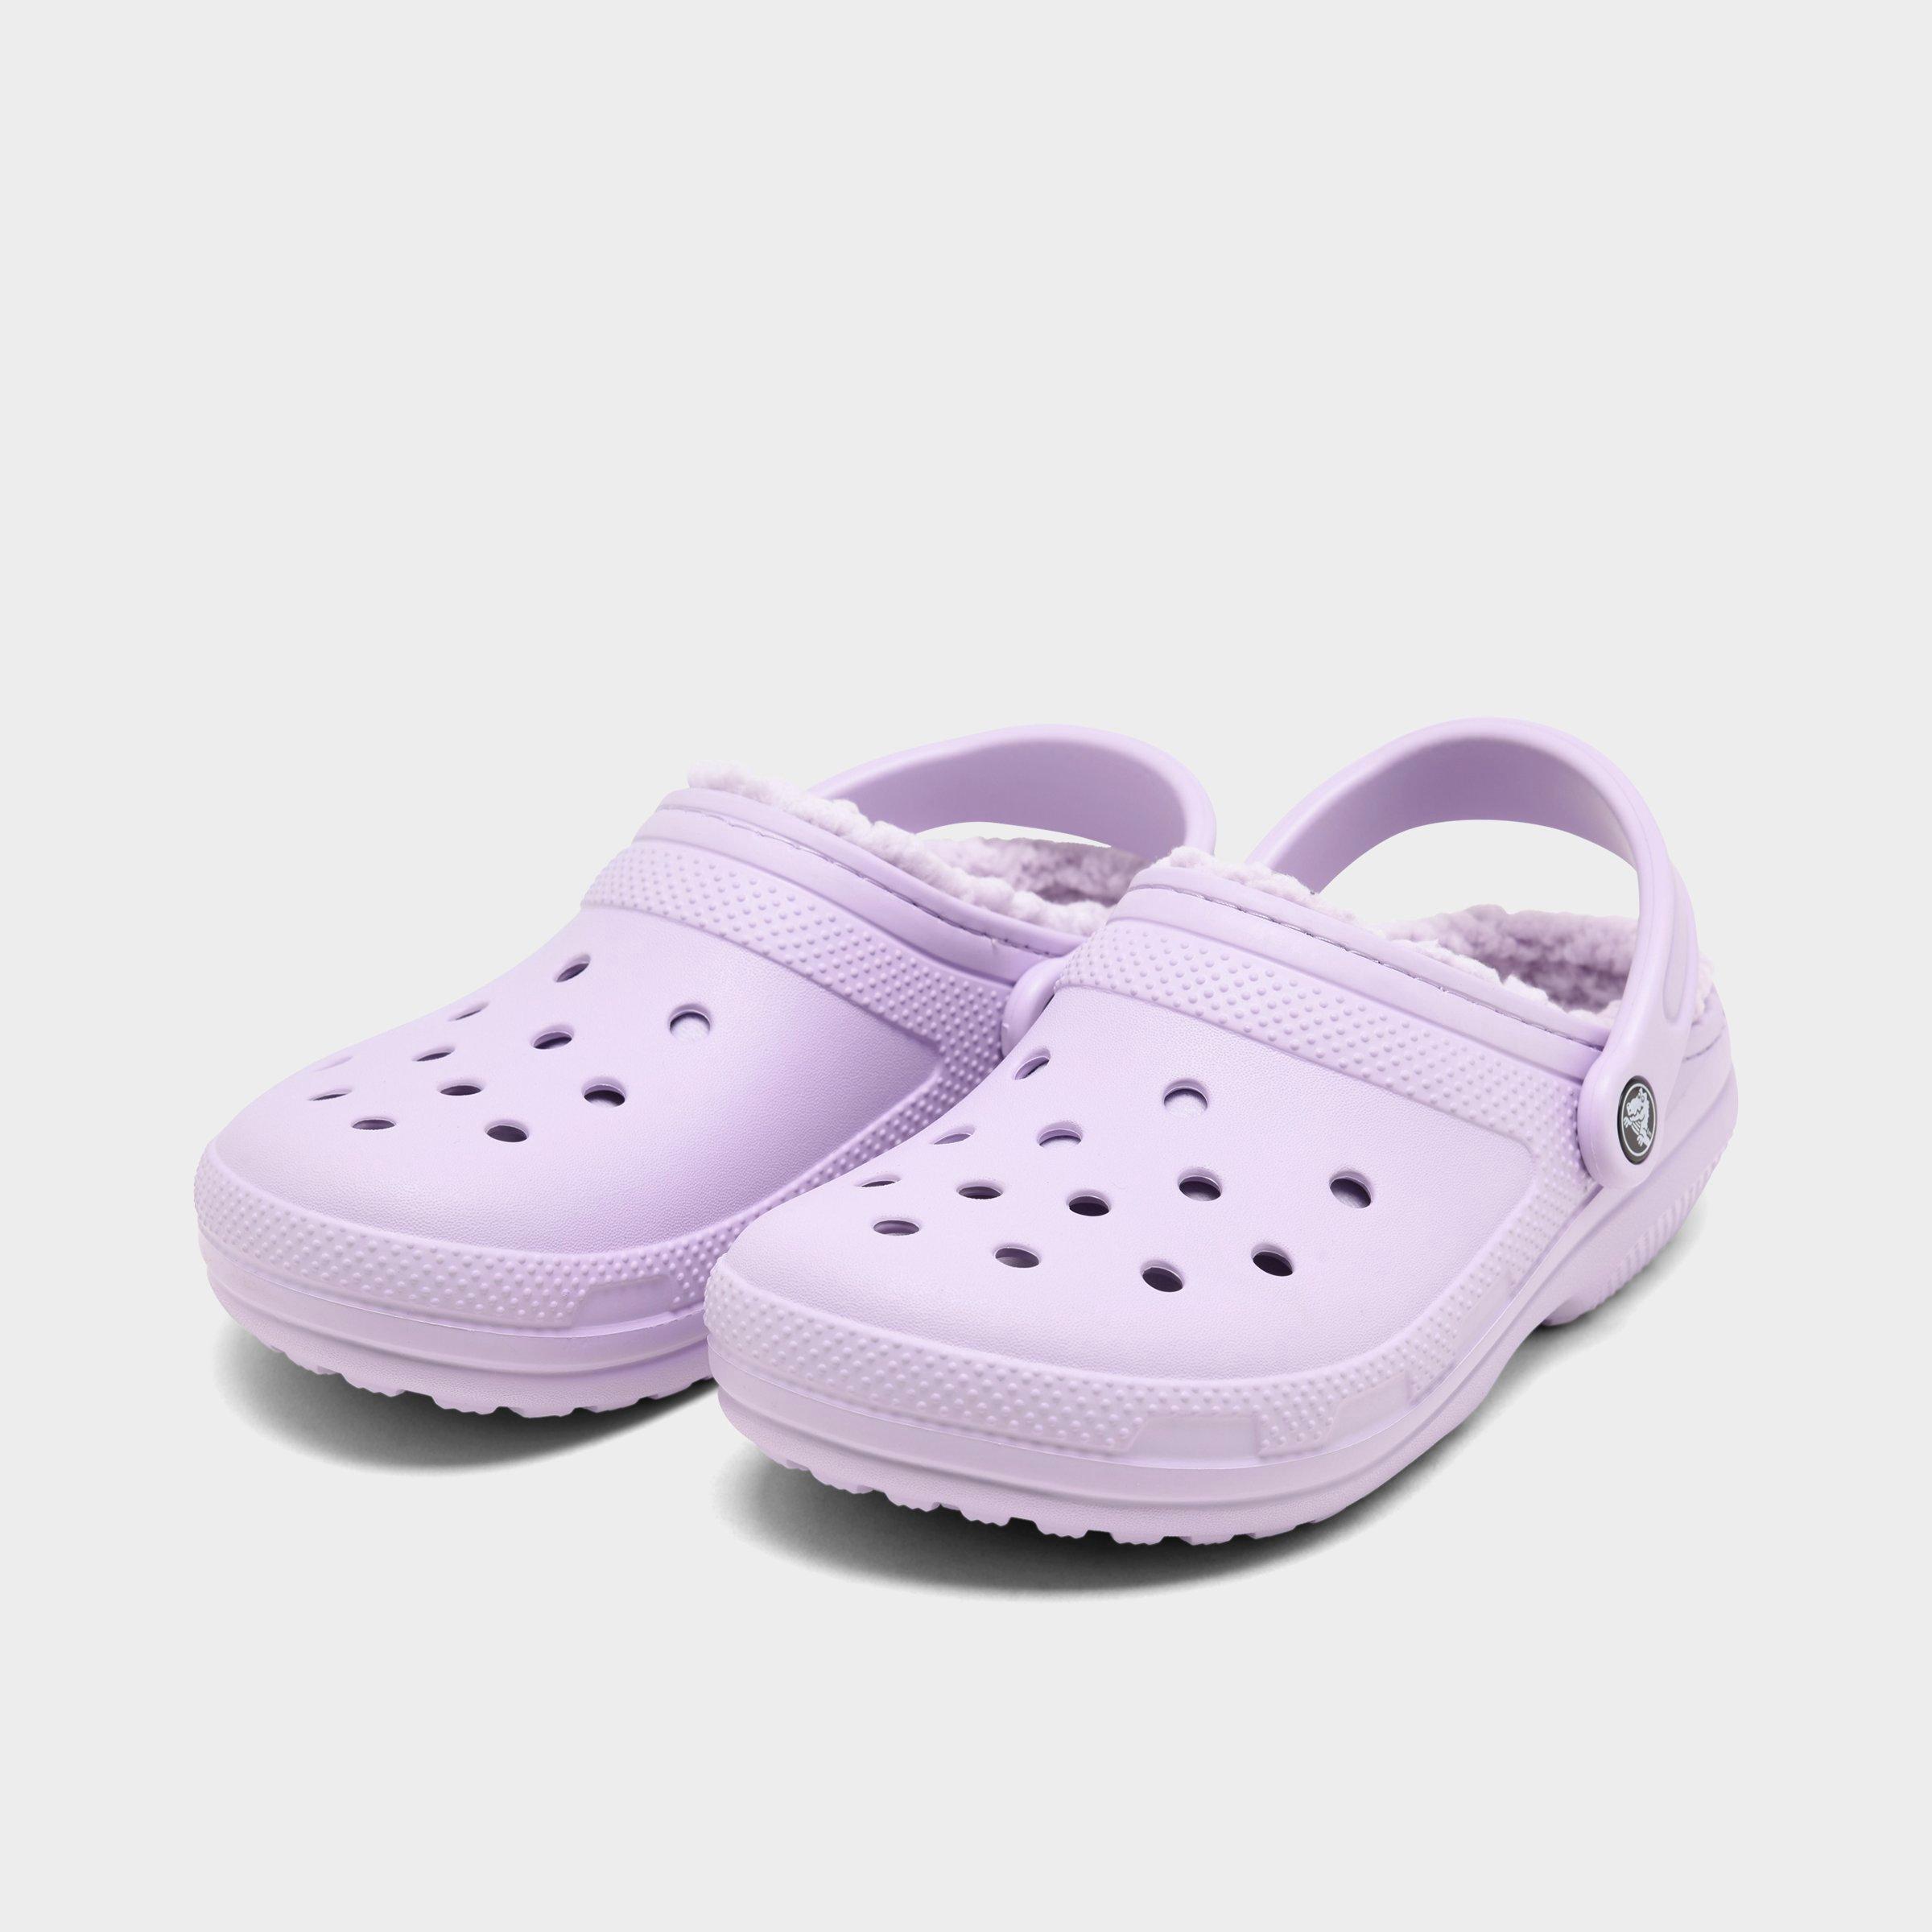 classic lined crocs lavender